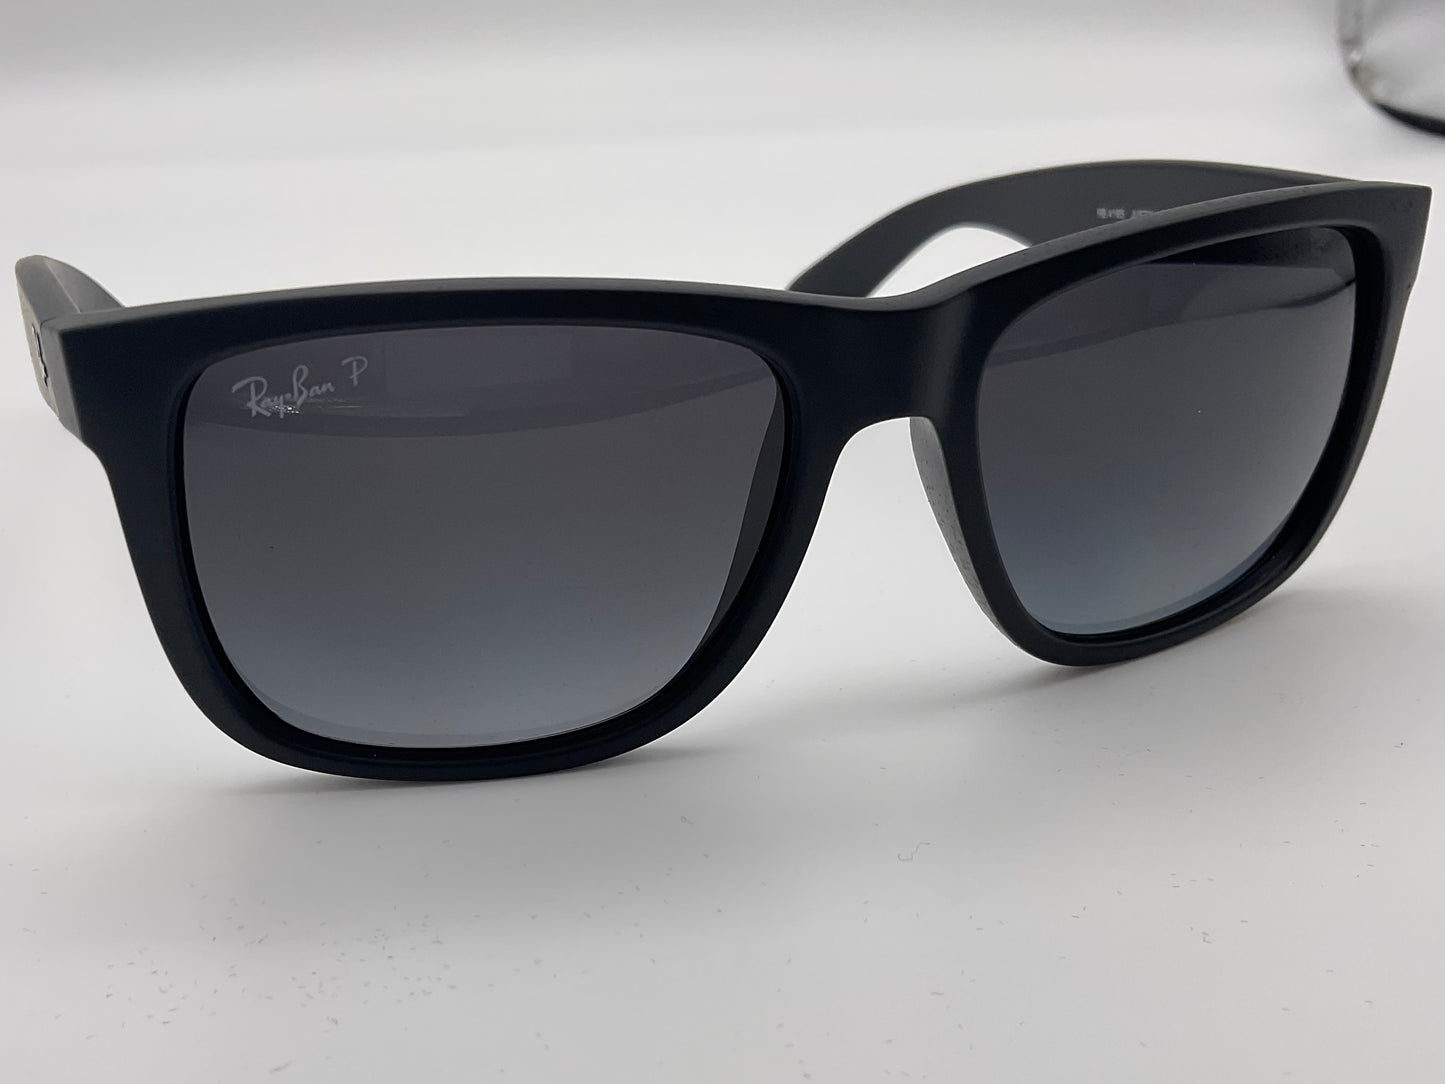 Ray Ban Justin RB4165 54mm 622/T3 Matte Black Grey Gradient Polarized Lens Sunglasses